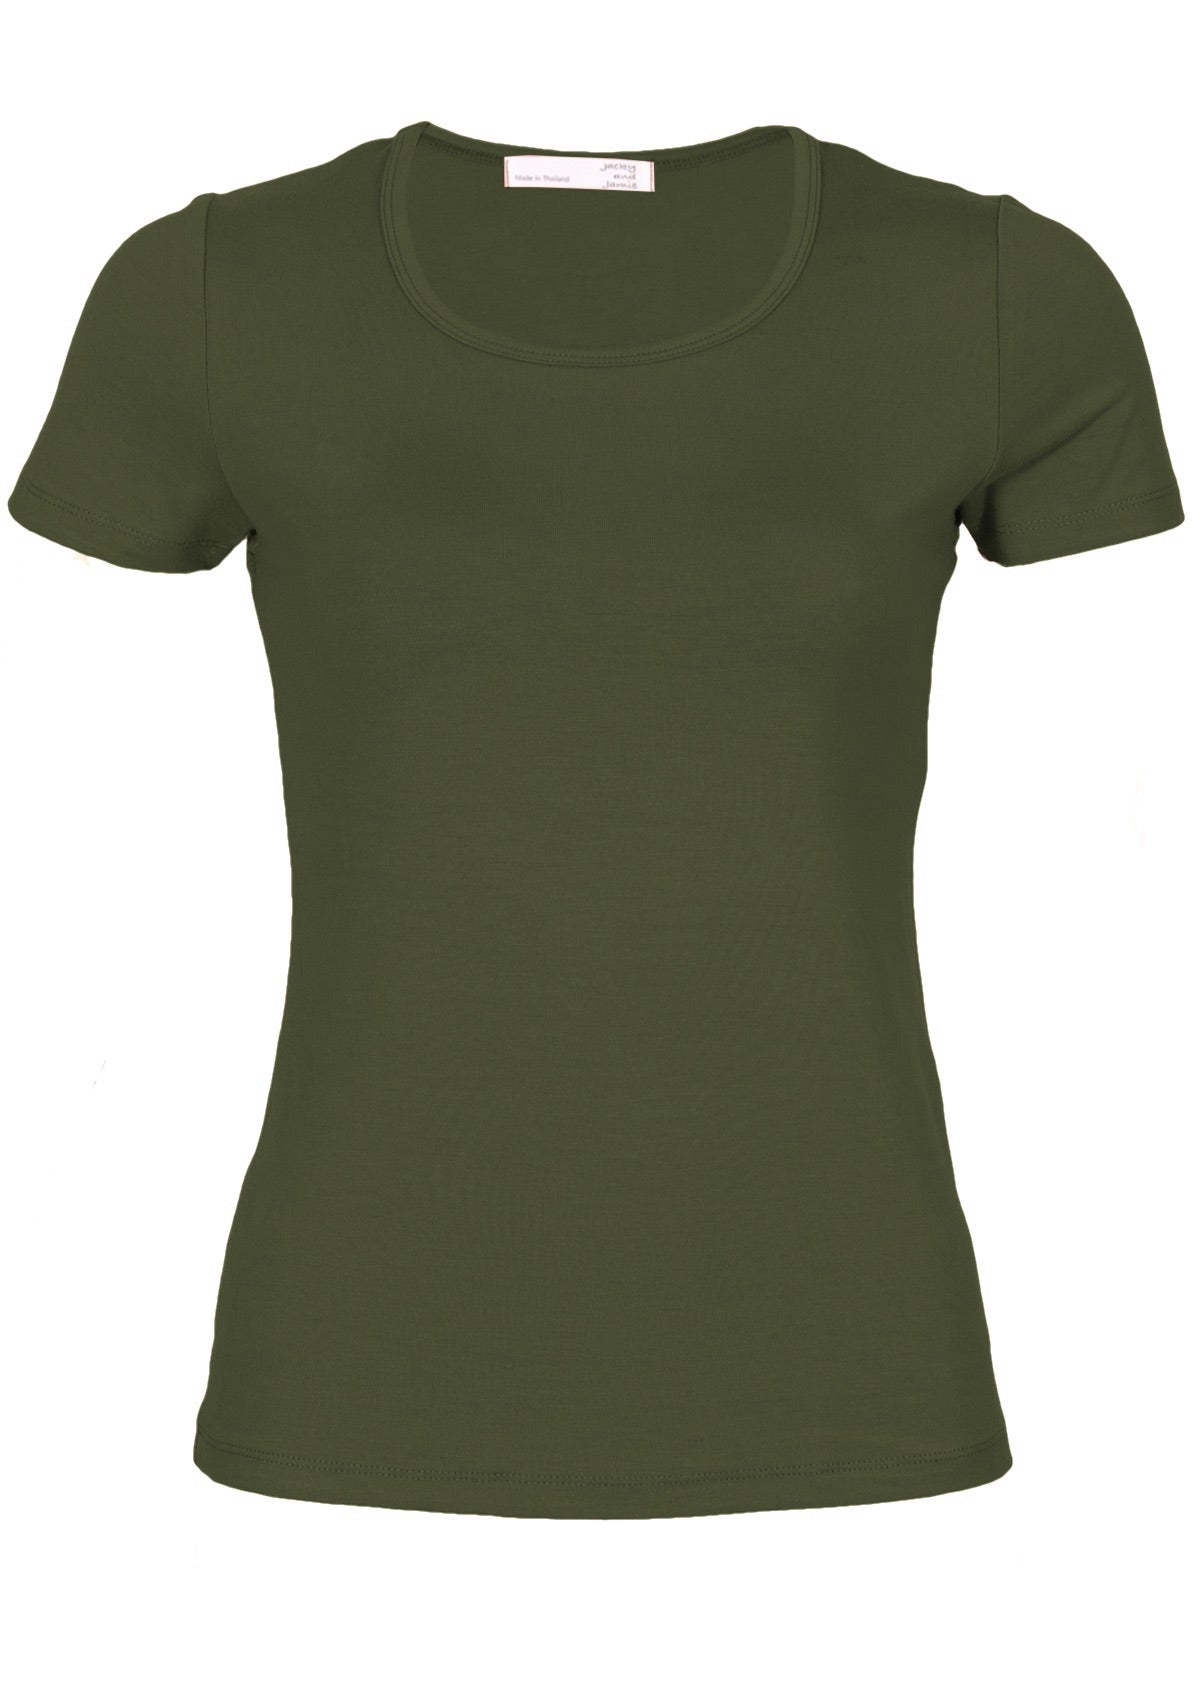 olive green short sleeve basic women's top